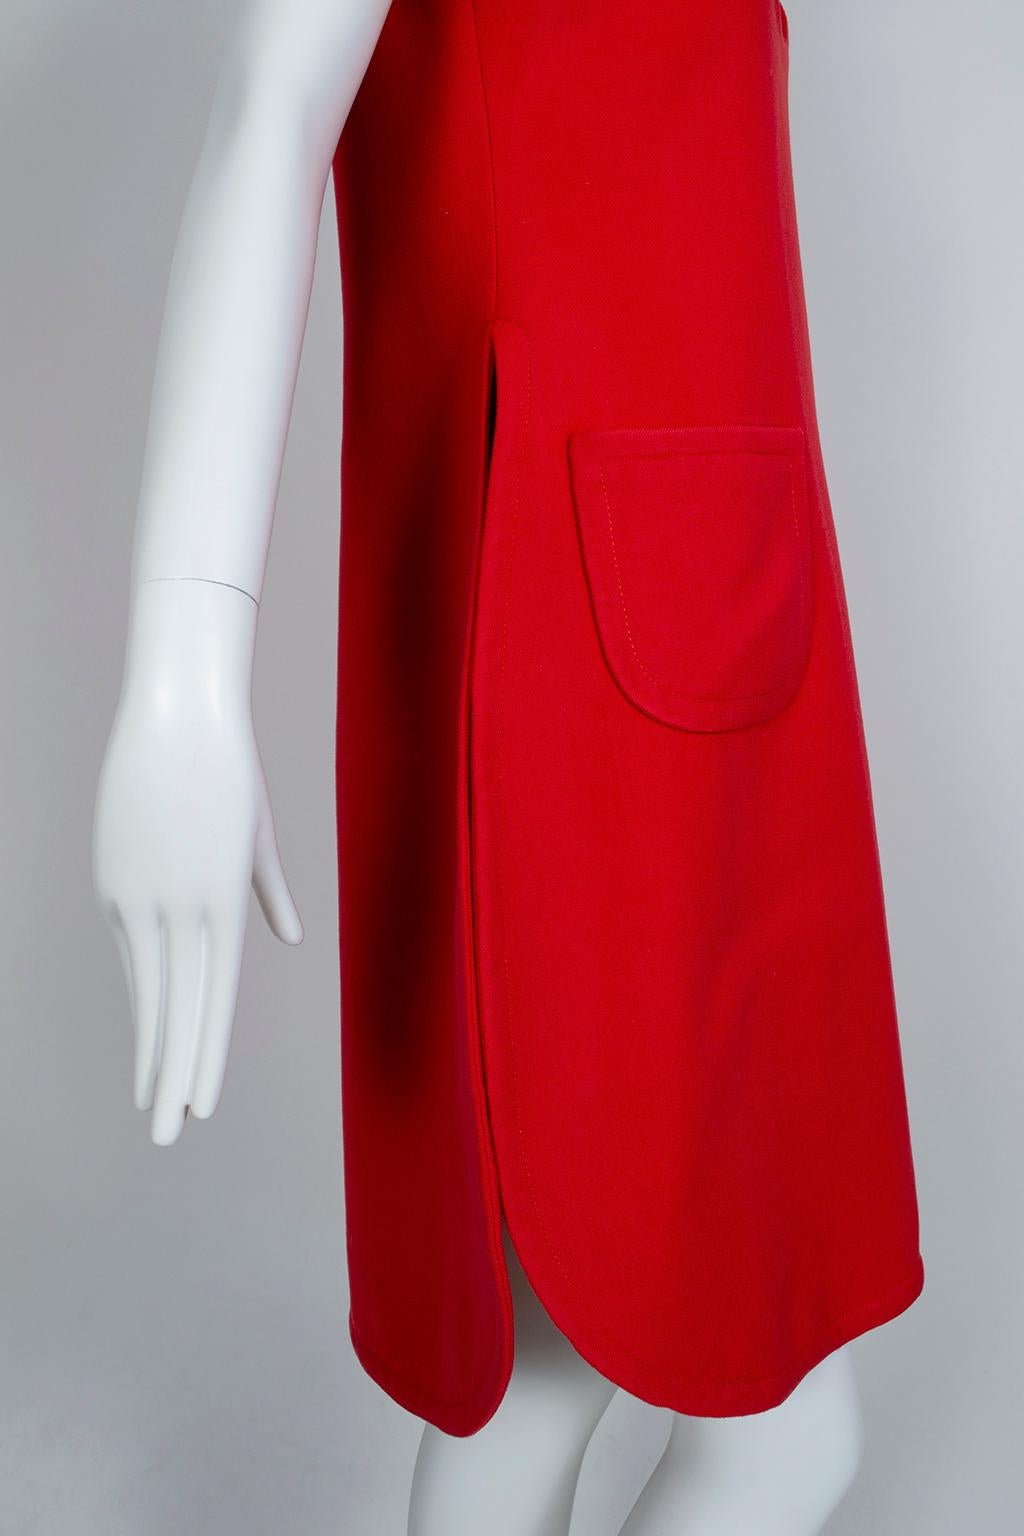 Red Space-Age Pierre Cardin Prototype Cutout Tabard Dress w Provenance-S-M, 1969 1